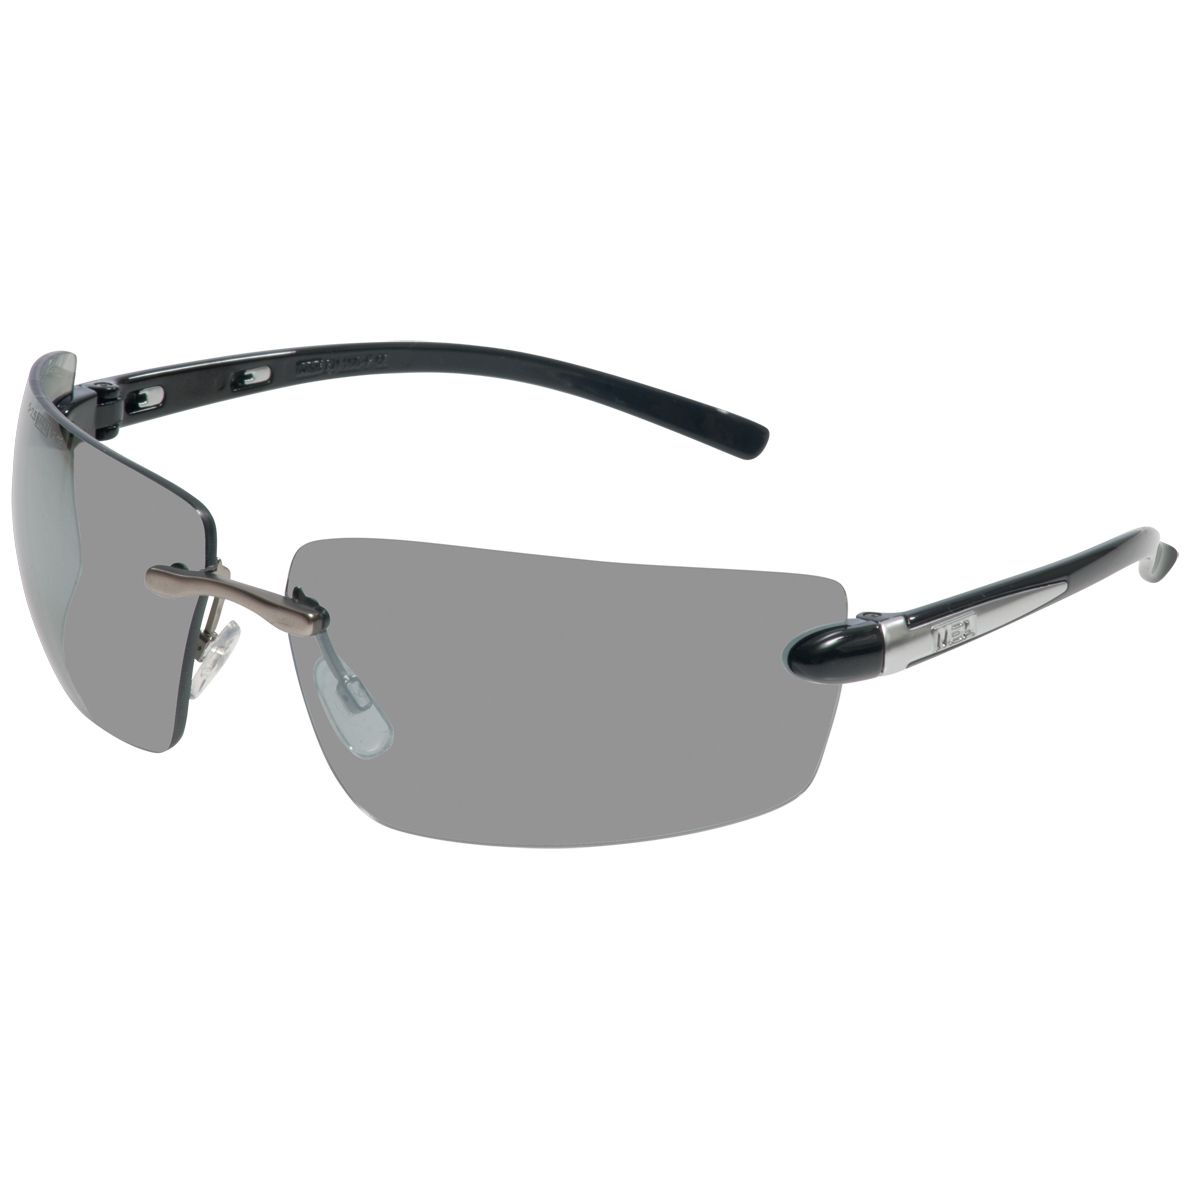 MSA Alaska safety glasses - scratch & fog resistant thanks to Sightgard coating - EN 166/172 - black/silver mirror